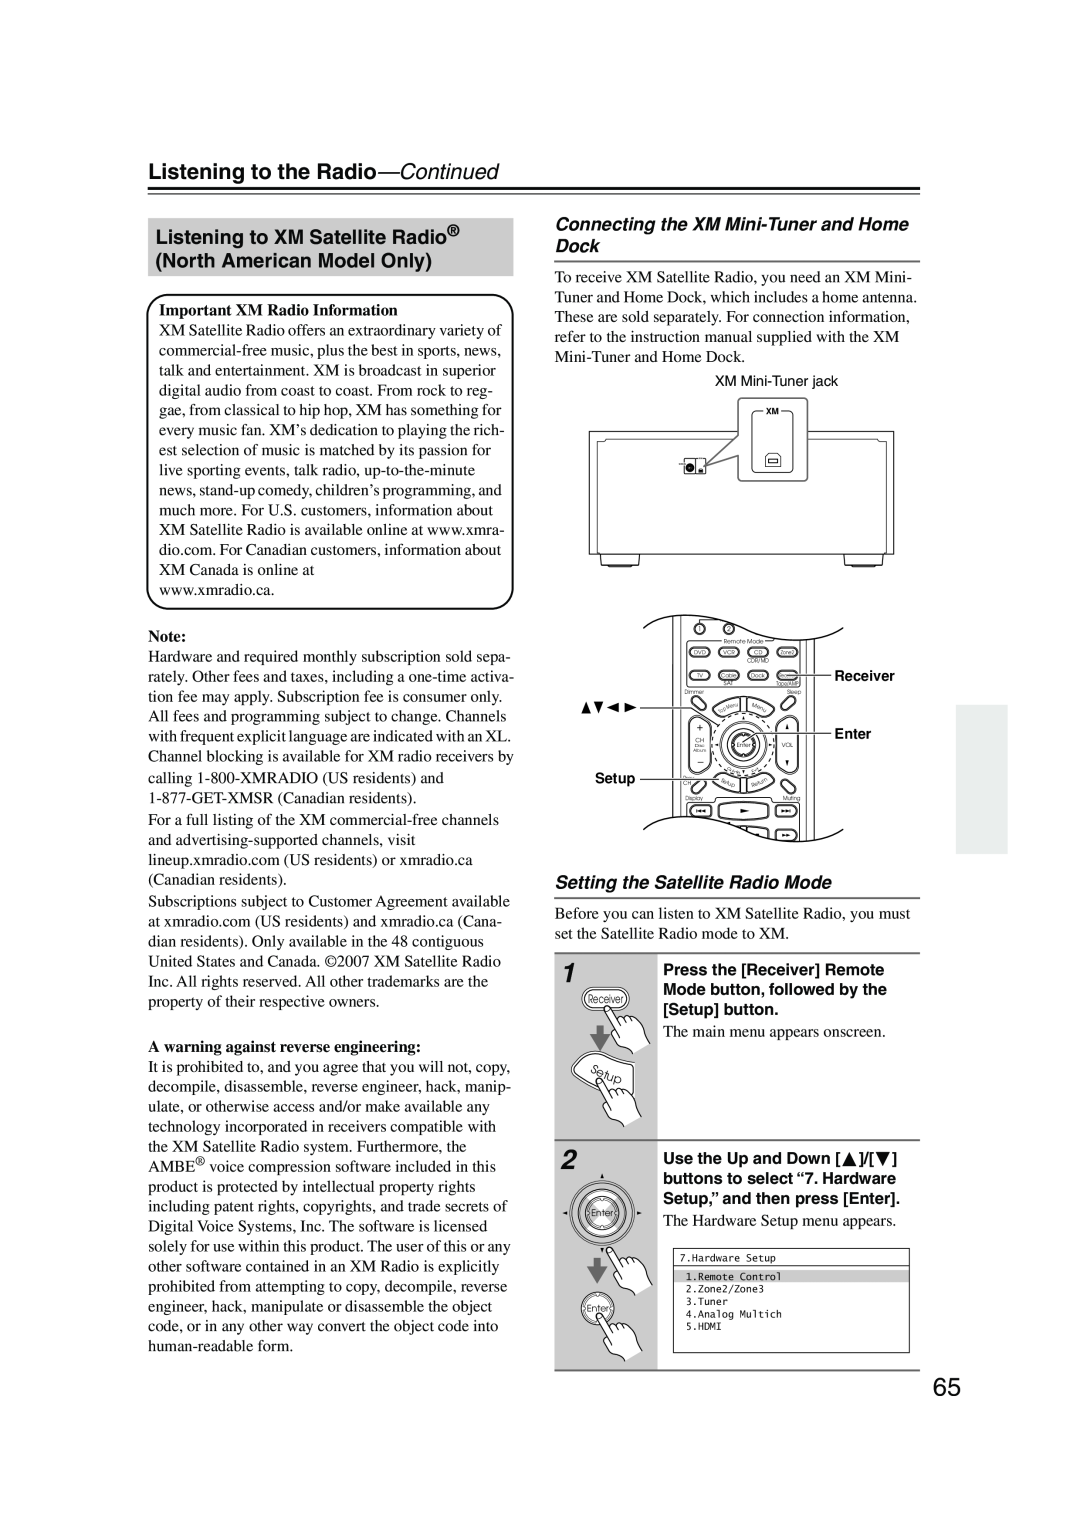 Integra DTR-7.8 instruction manual Connecting the XM Mini-Tunerand Home Dock, Setting the Satellite Radio Mode 